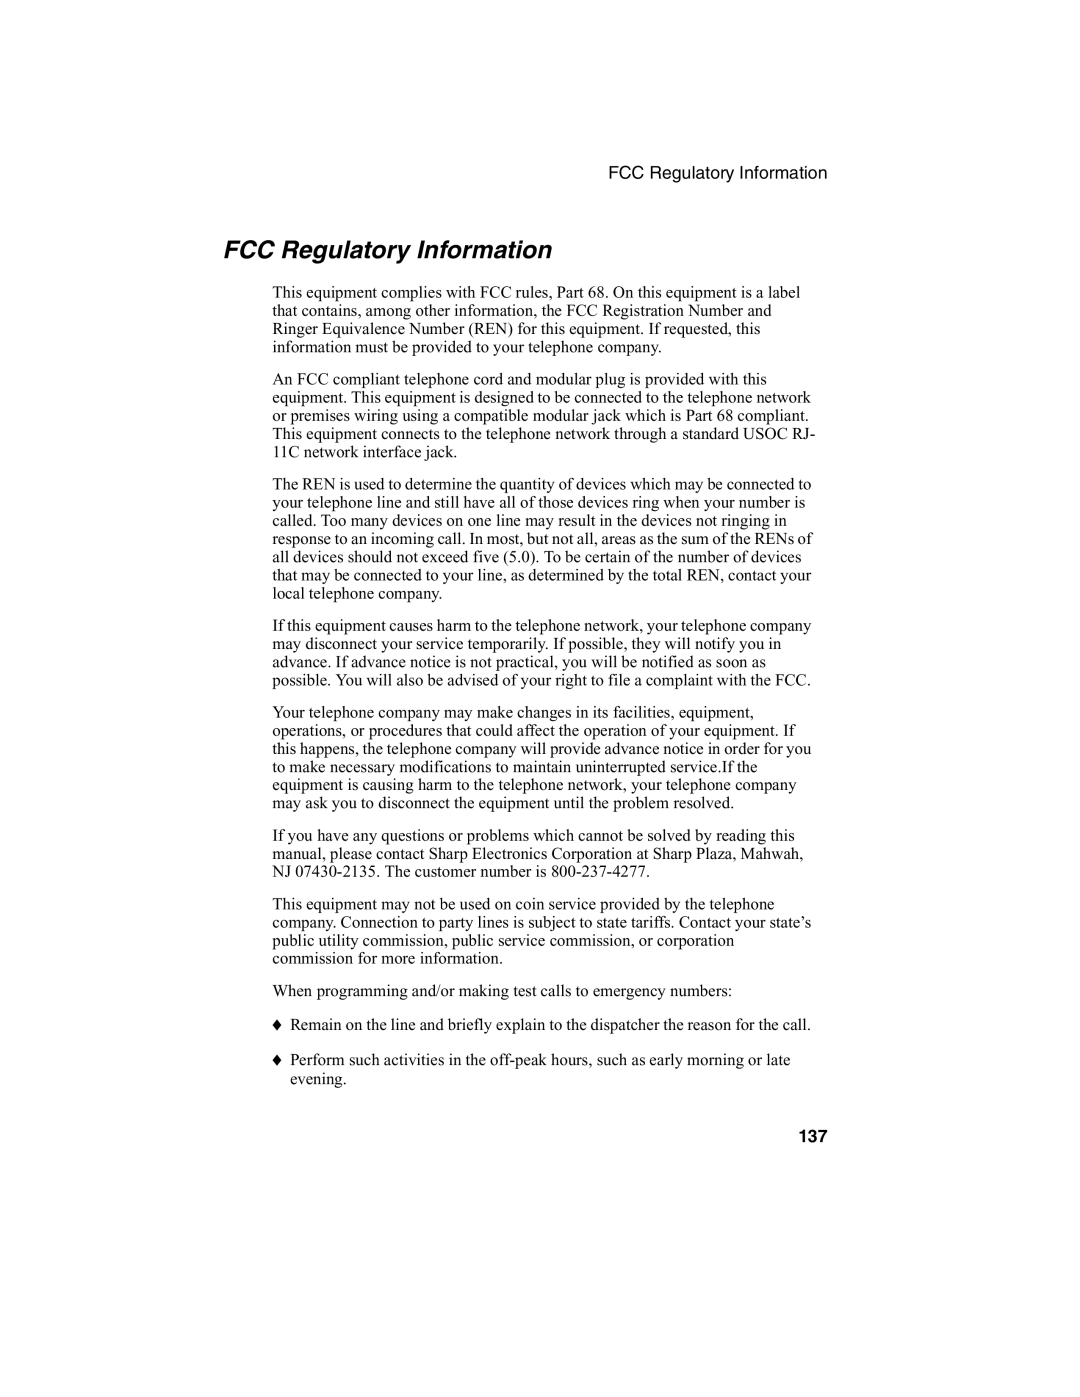 Sharp FO-2970M operation manual FCC Regulatory Information 